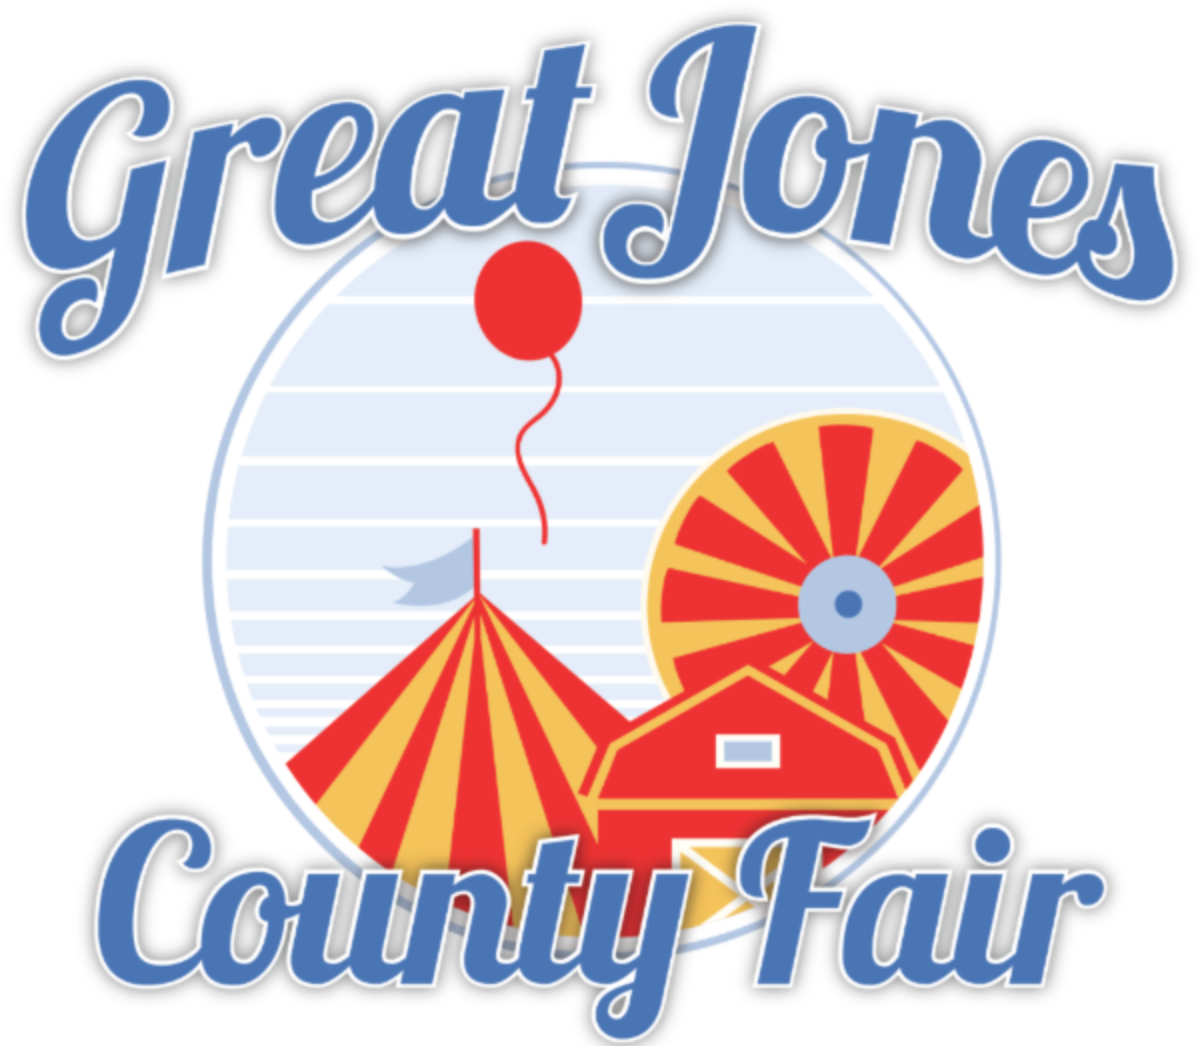 The Great Jones County Fair